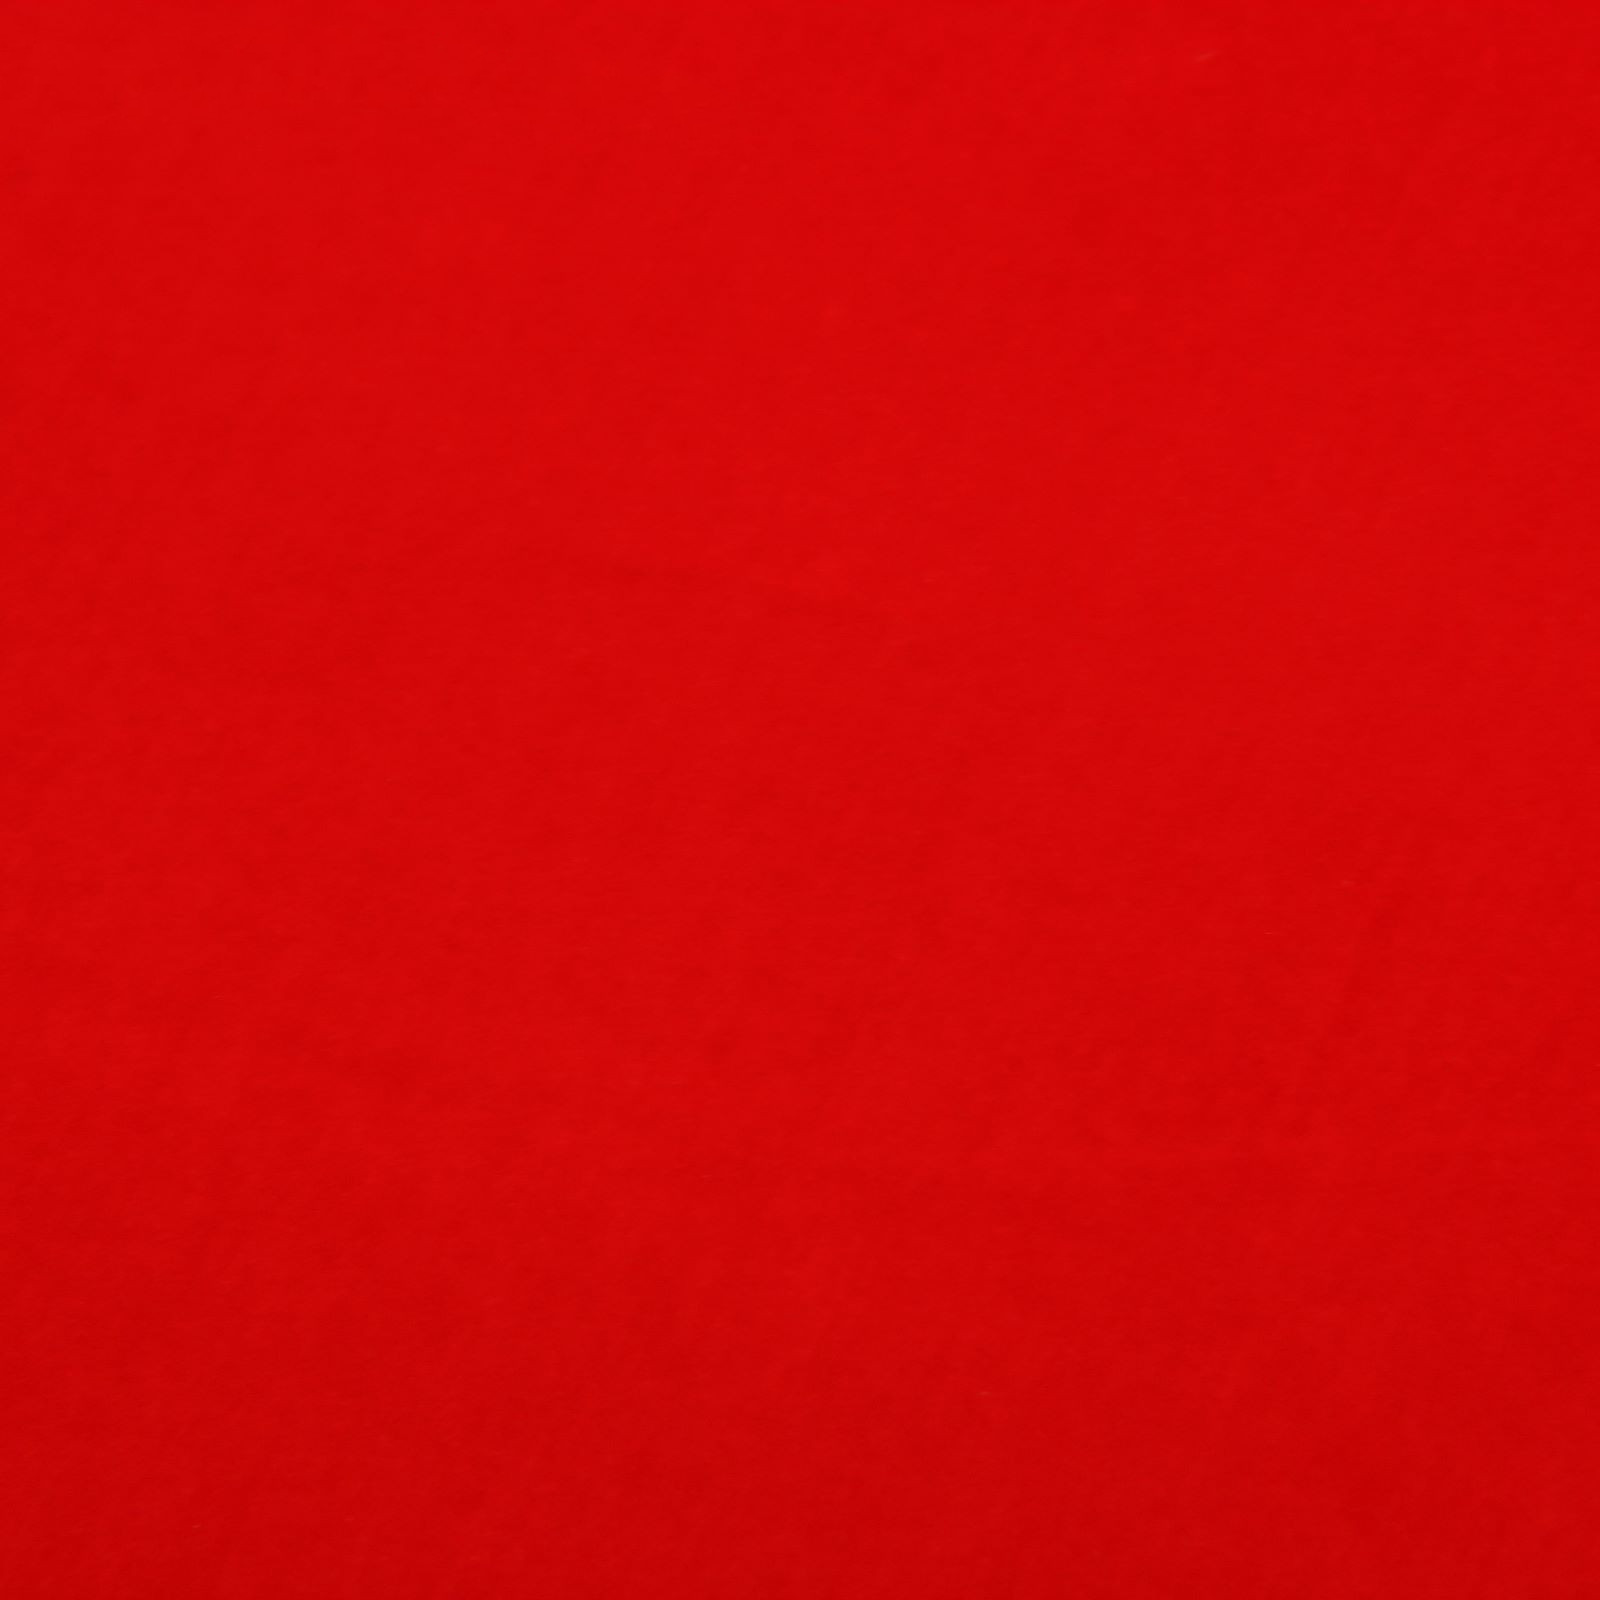 Сайт красный квадрат. Насыщенно красный. Красная бумага. Красный квадрат. Красный квадратик.